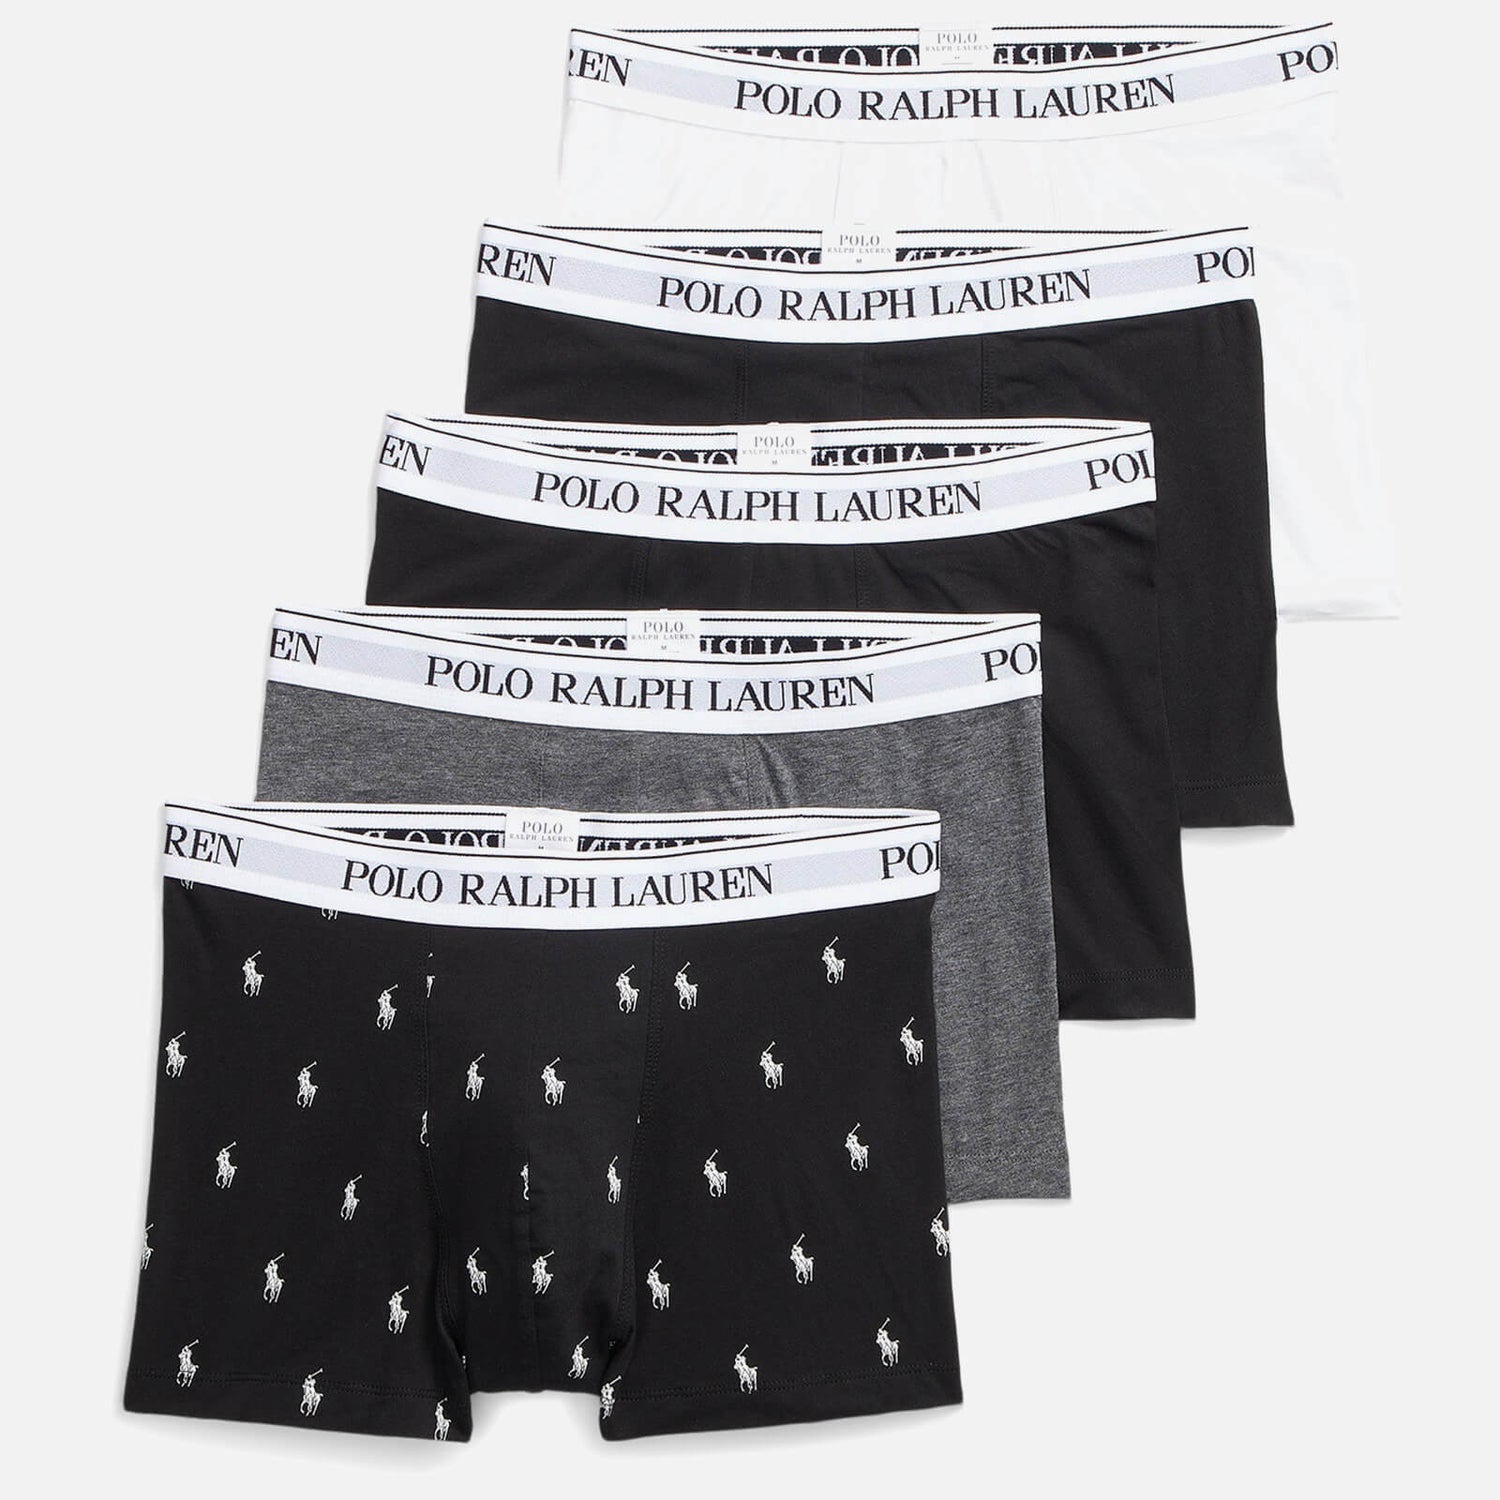 Polo Ralph Lauren Men's 5-Pack Trunk Boxer Shorts - White/Black/Black/Charcoal Heather/Black All Over Print - S